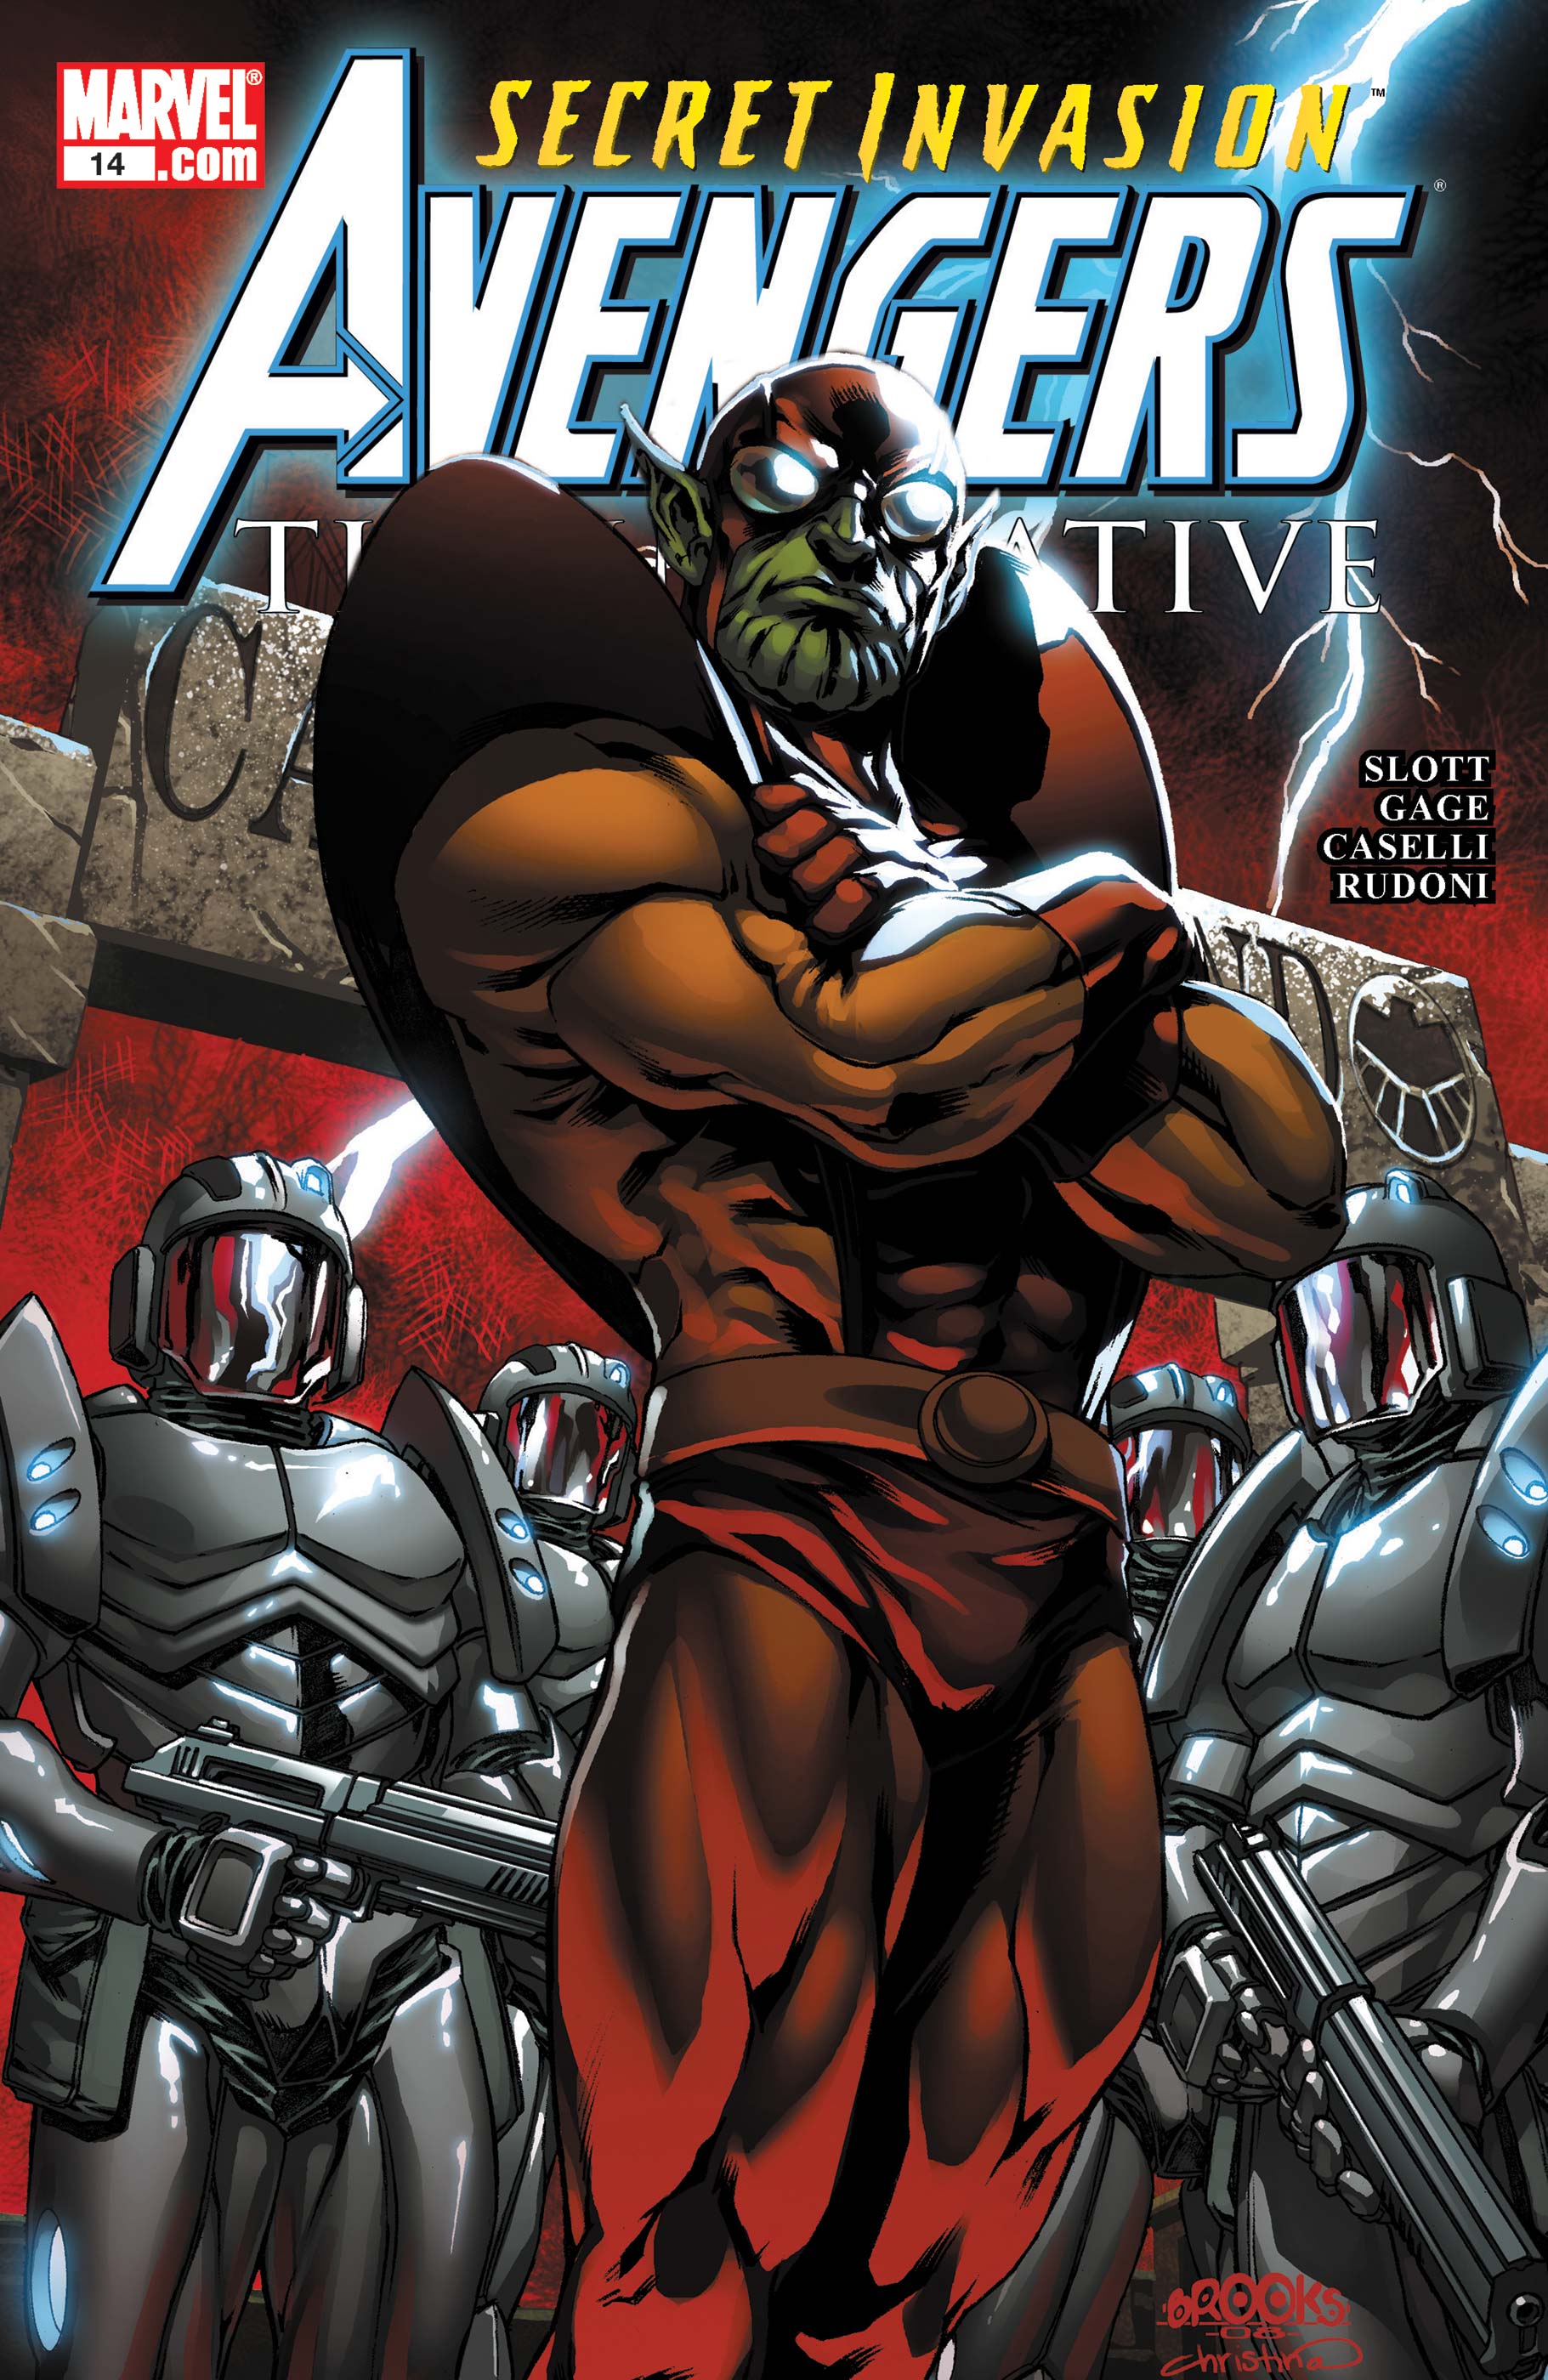 Avengers: The Initiative (2007) #14